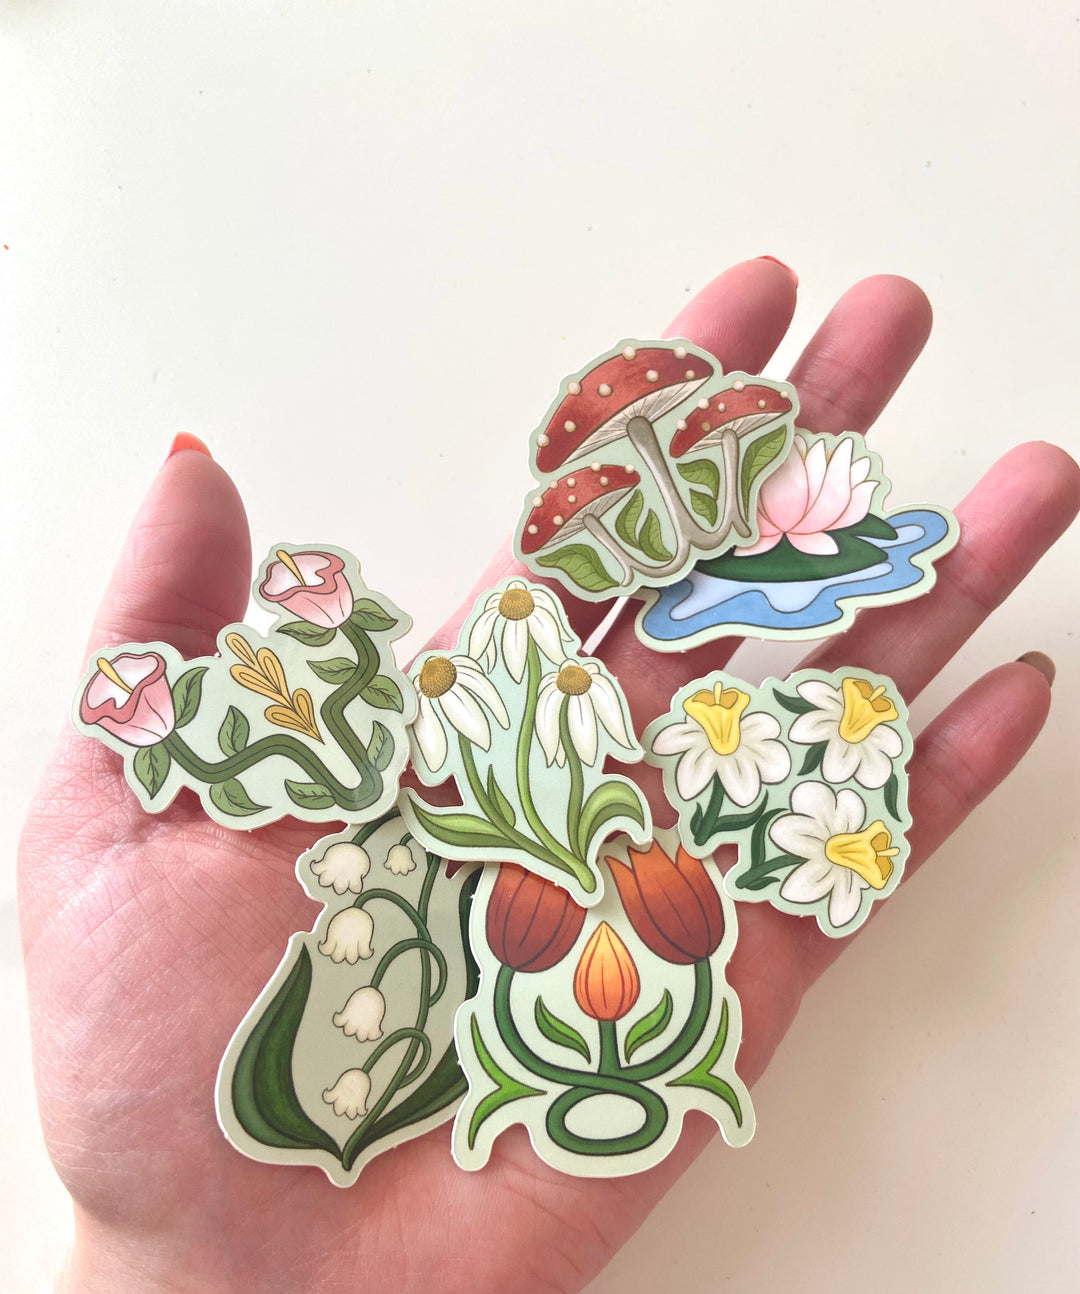 Flora sticker pack